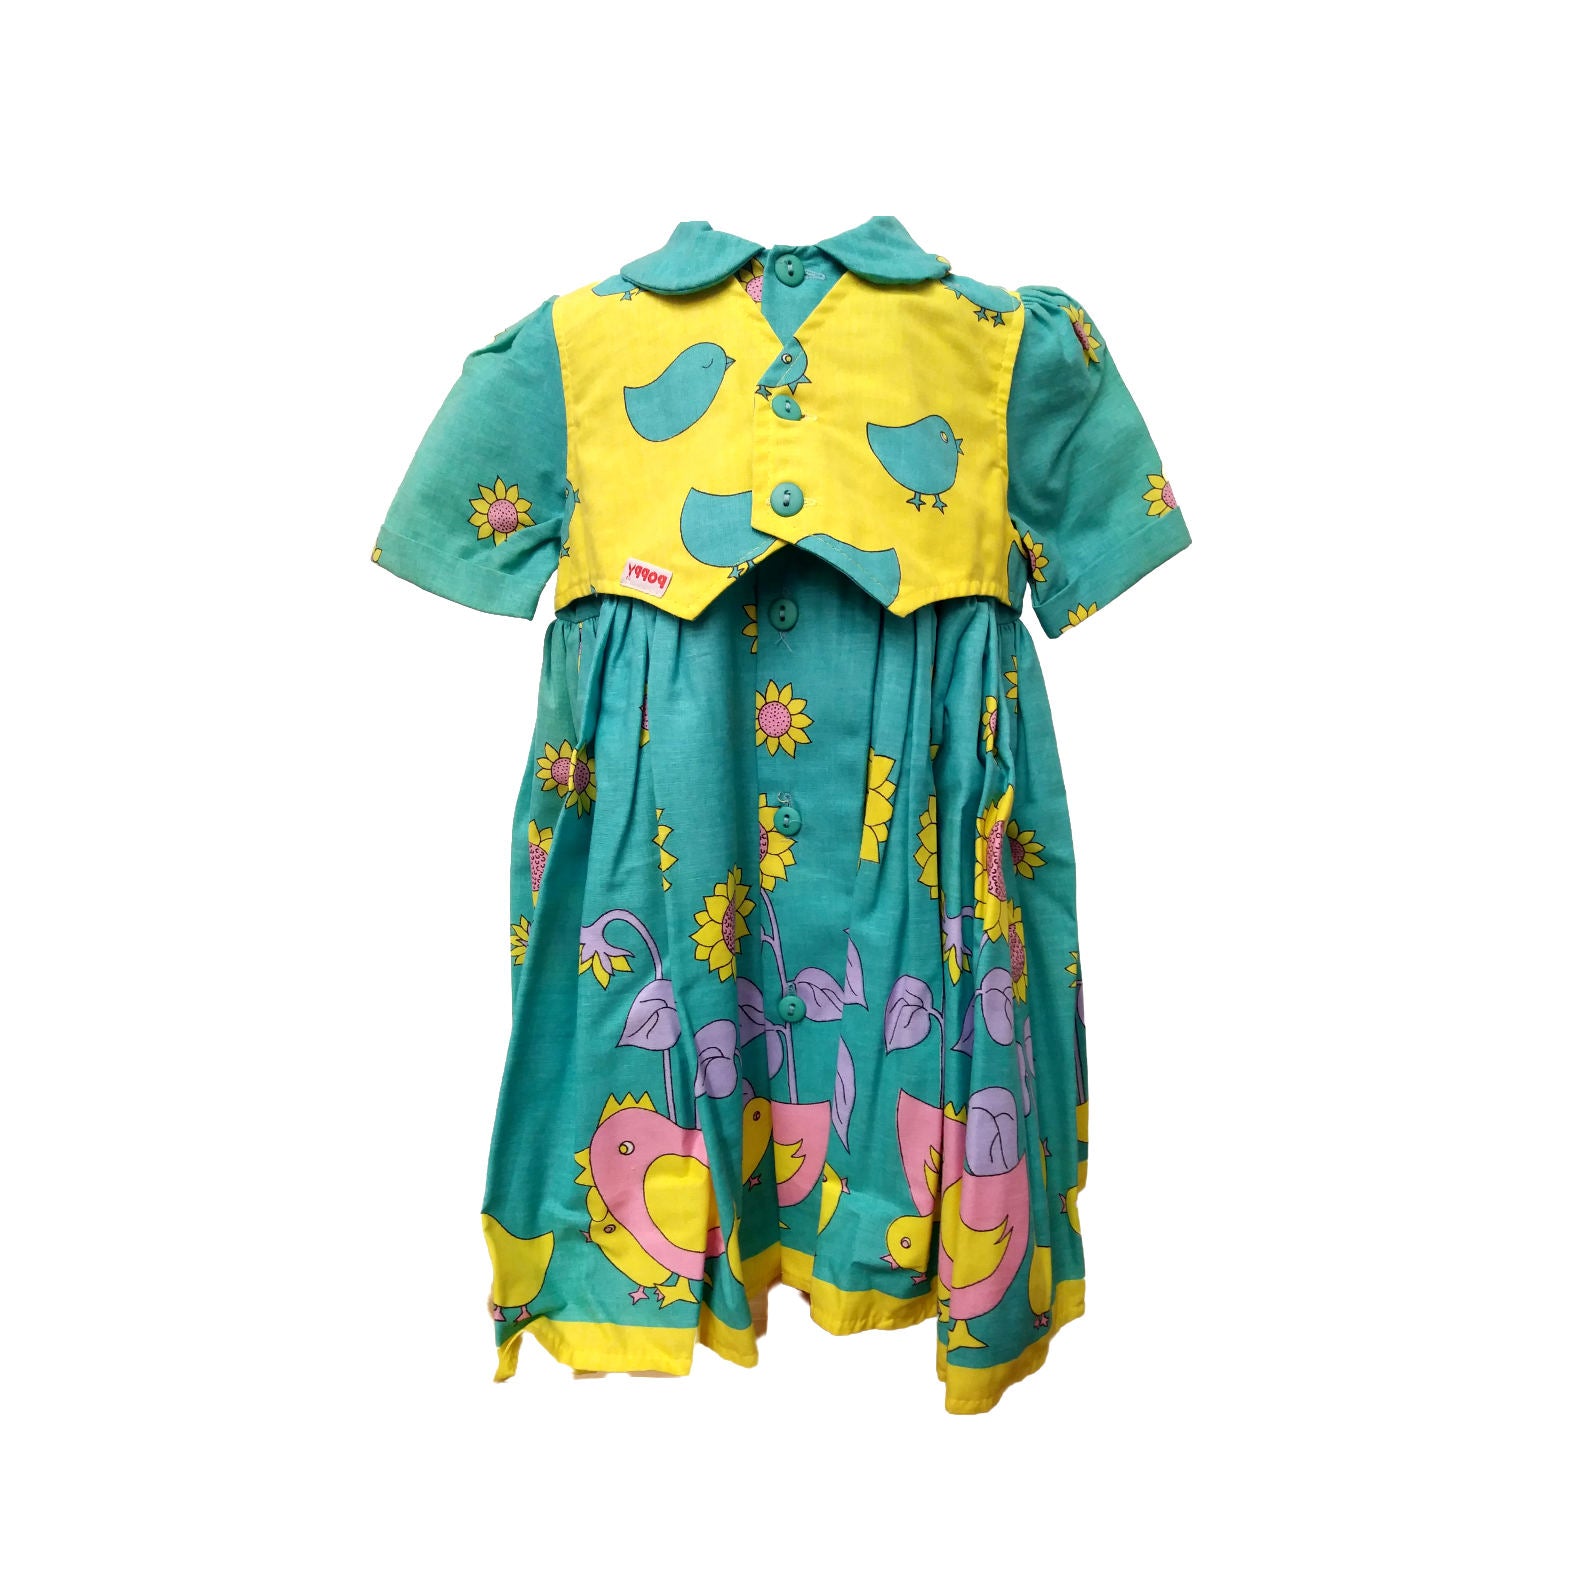 Archive Poppy - Waistcoat Dress - Turquoise Sunflowers